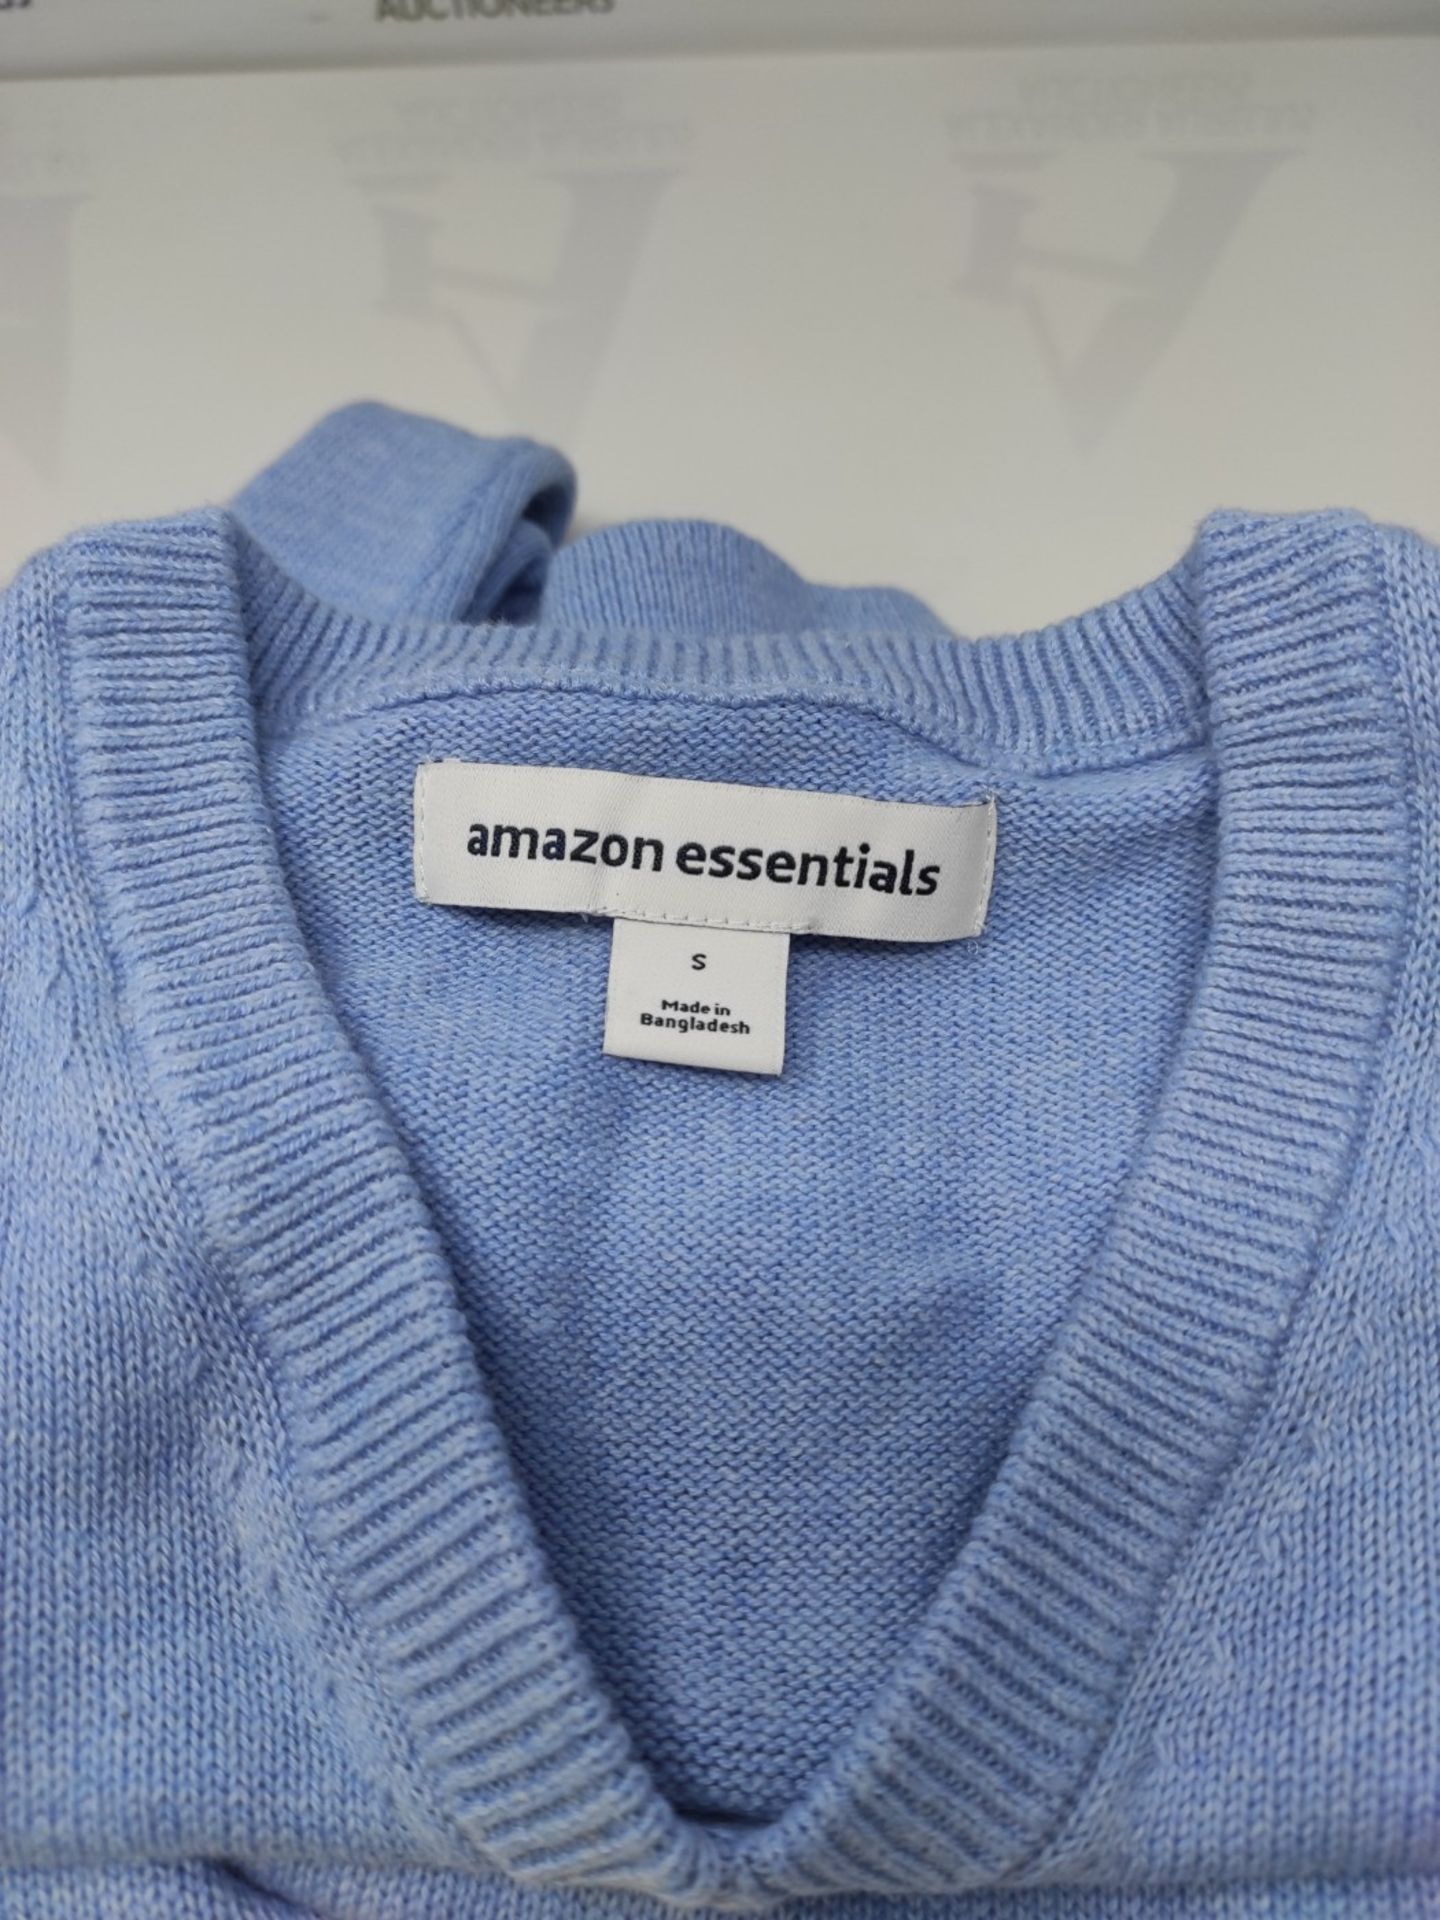 Amazon Essentials Men's V-Neck Sweater, small - Image 2 of 2